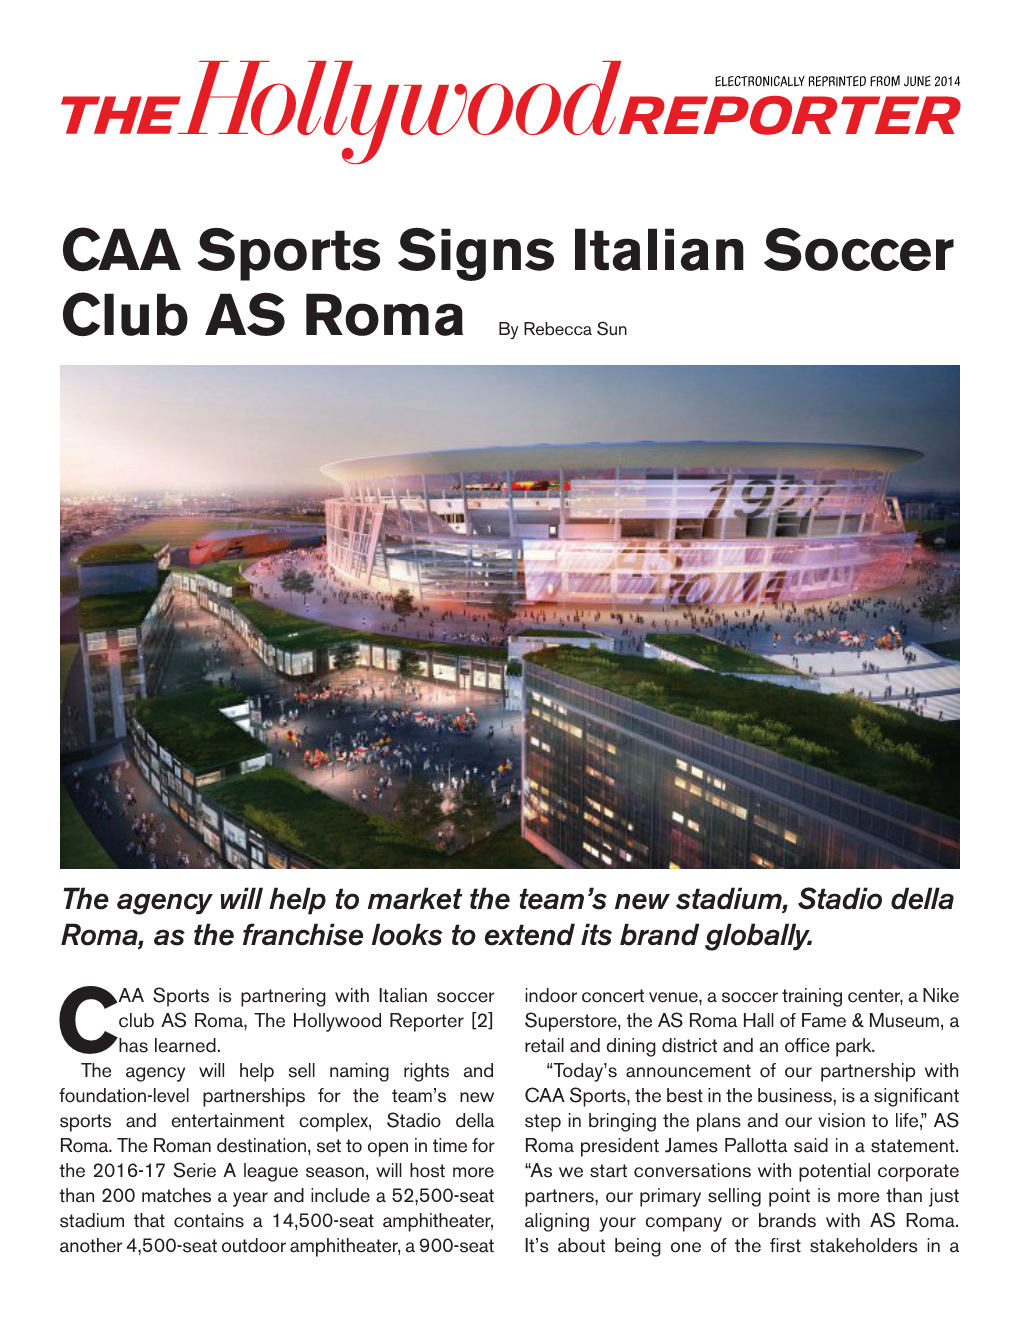 CAA Sports Signs Italian Soccer Club AS Roma by Rebecca